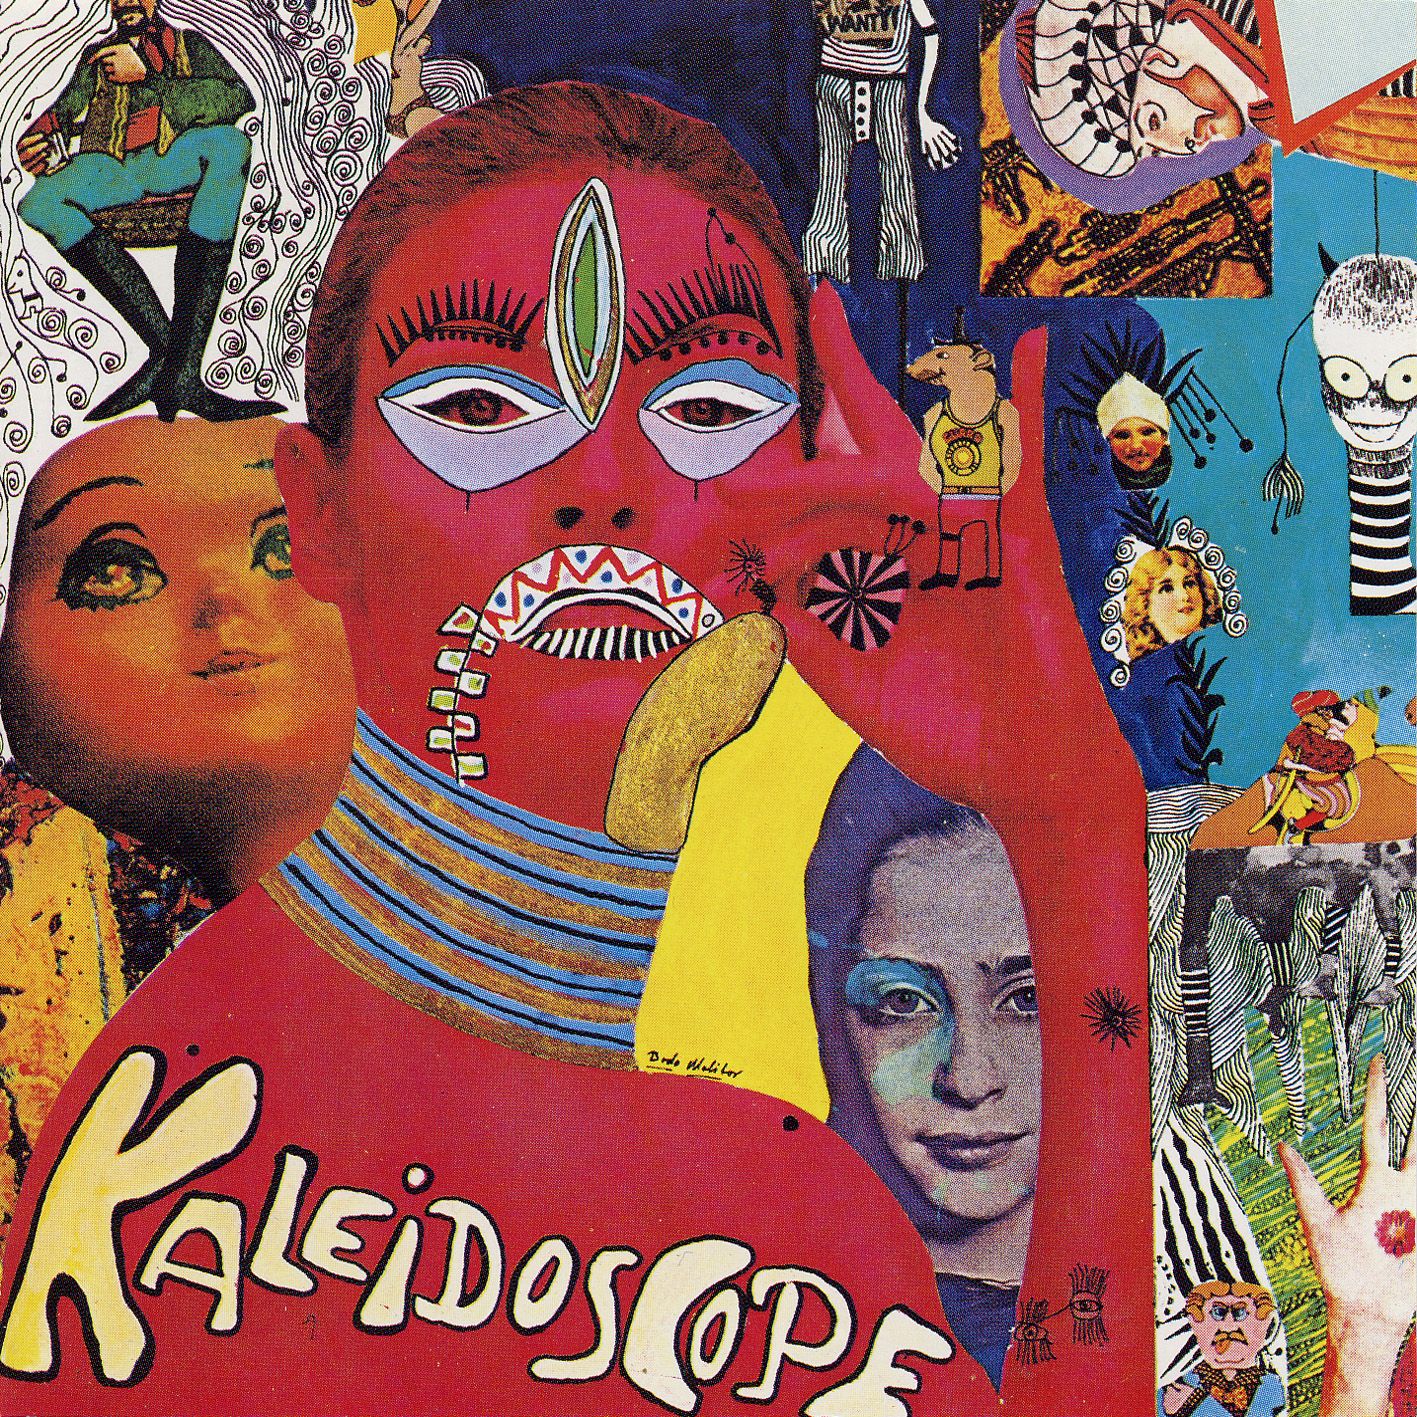 Kaleidoscope designs -  México